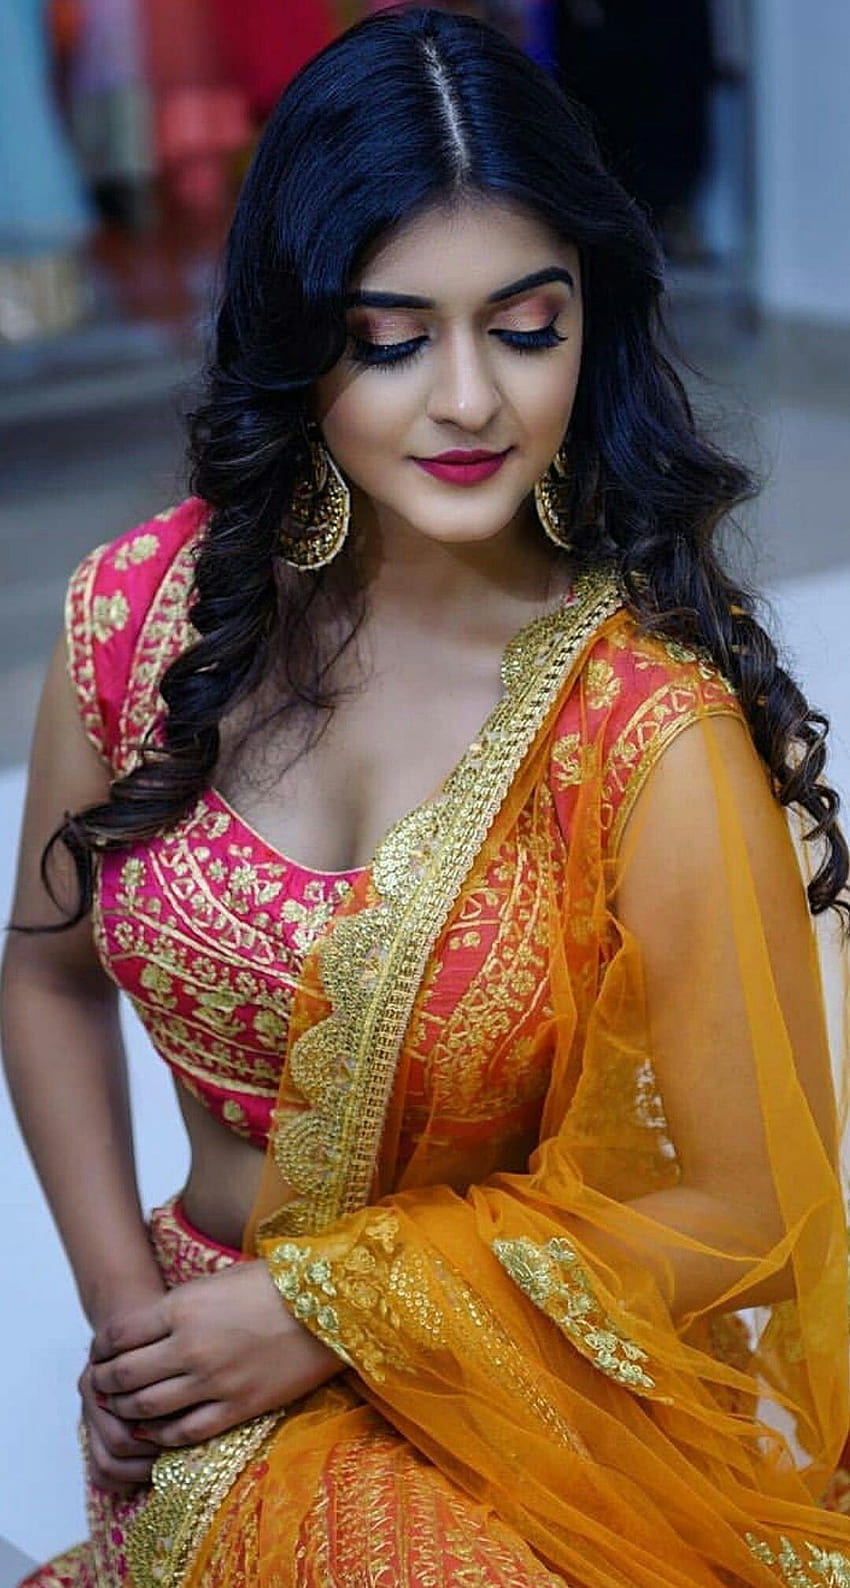 https://e1.pxfuel.com/desktop-wallpaper/633/772/desktop-wallpaper-pin-on-beautiful-lipstick-indian-beautiful-girl-mobile.jpg